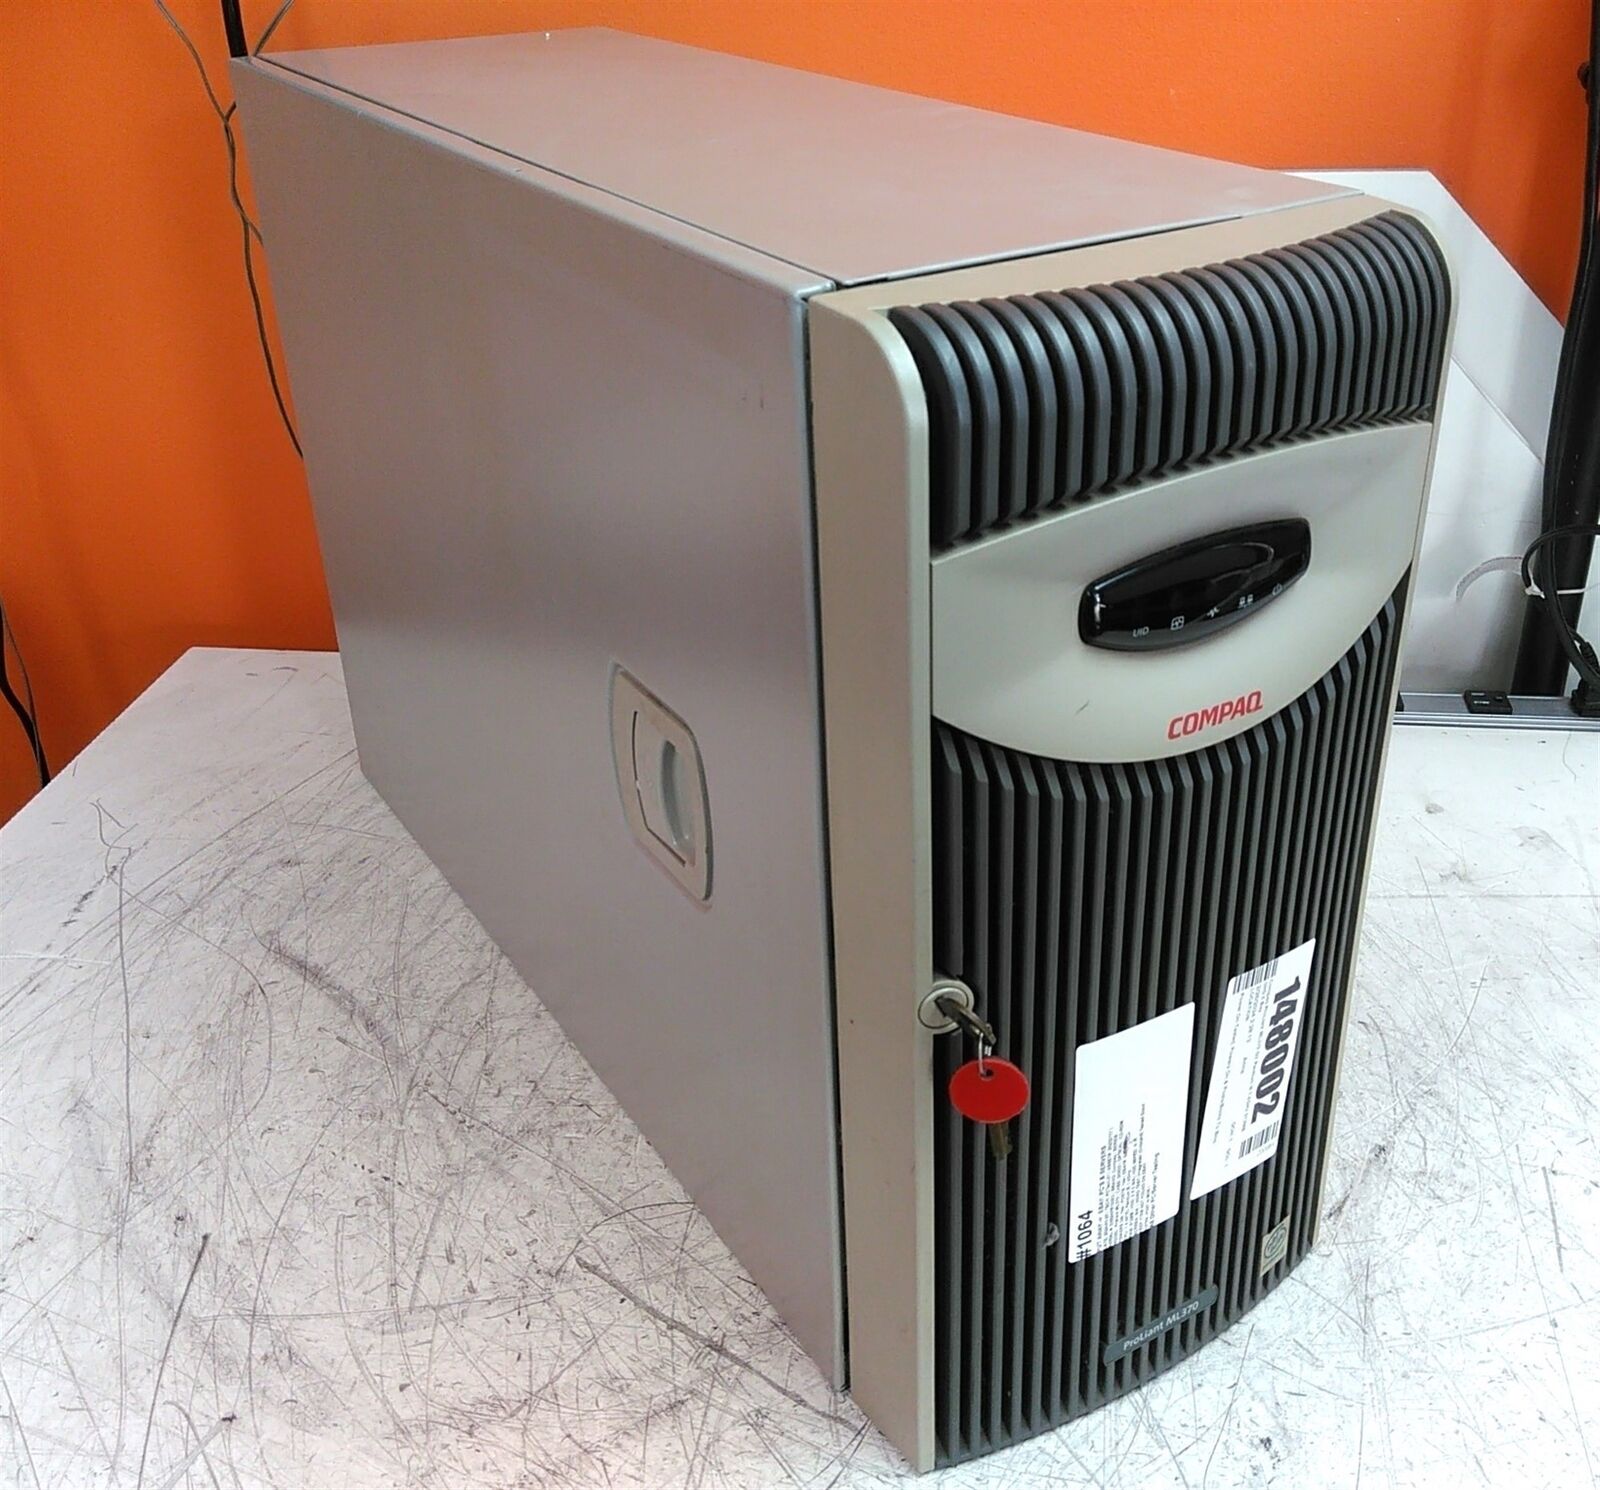 Compaq ProLiant ML370 G2 Pentium III 1.4GHz 512MB 0HD 6 Bay